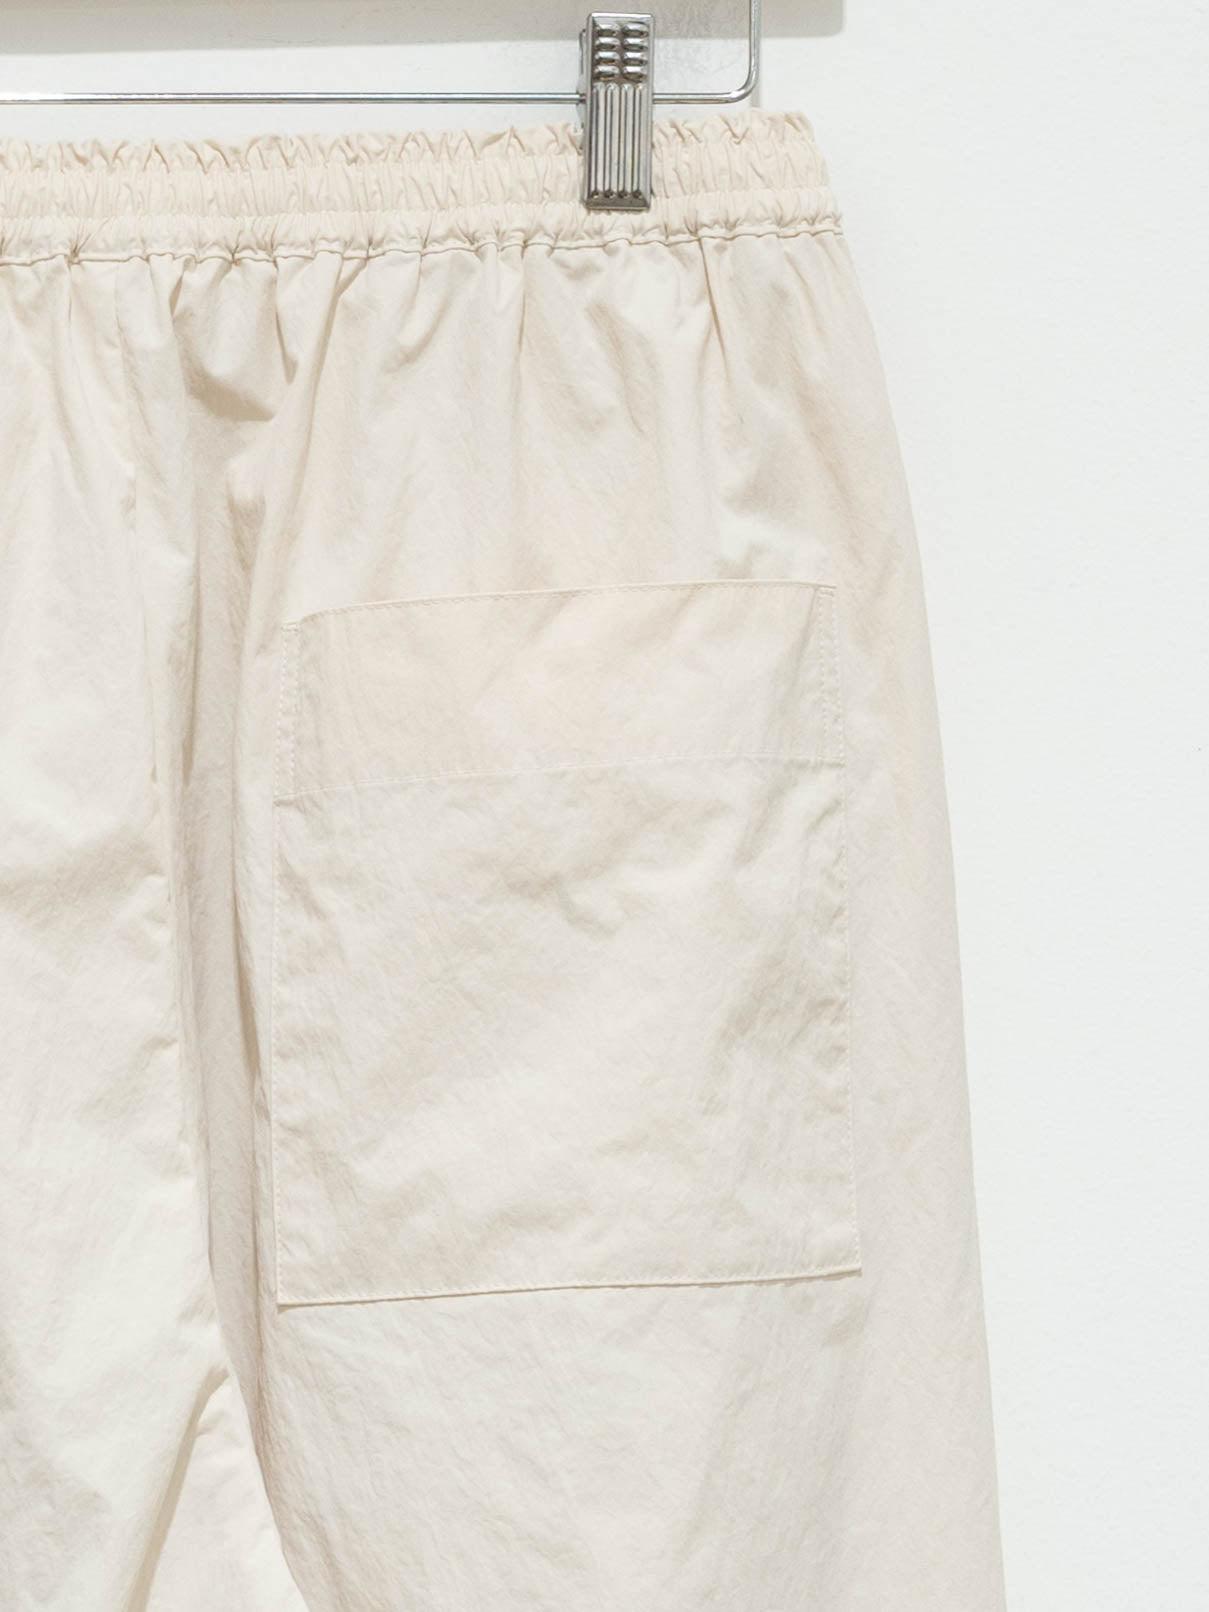 Namu Shop - Veritecoeur Recycled Nylon Tucked Pants - Cream